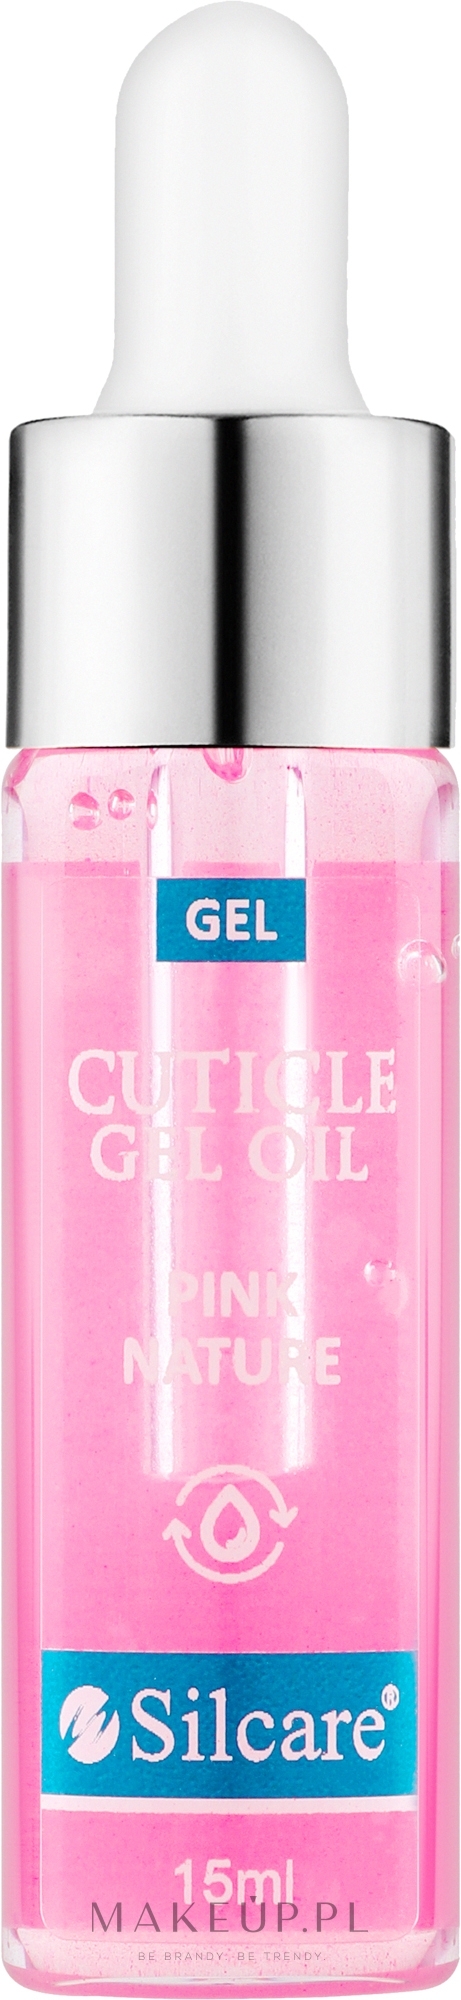 Olejek do paznokci i skórek w żelu - Silcare Cuticle Gel Oil The Garden Of Colour Pink Nature — Zdjęcie 15 ml